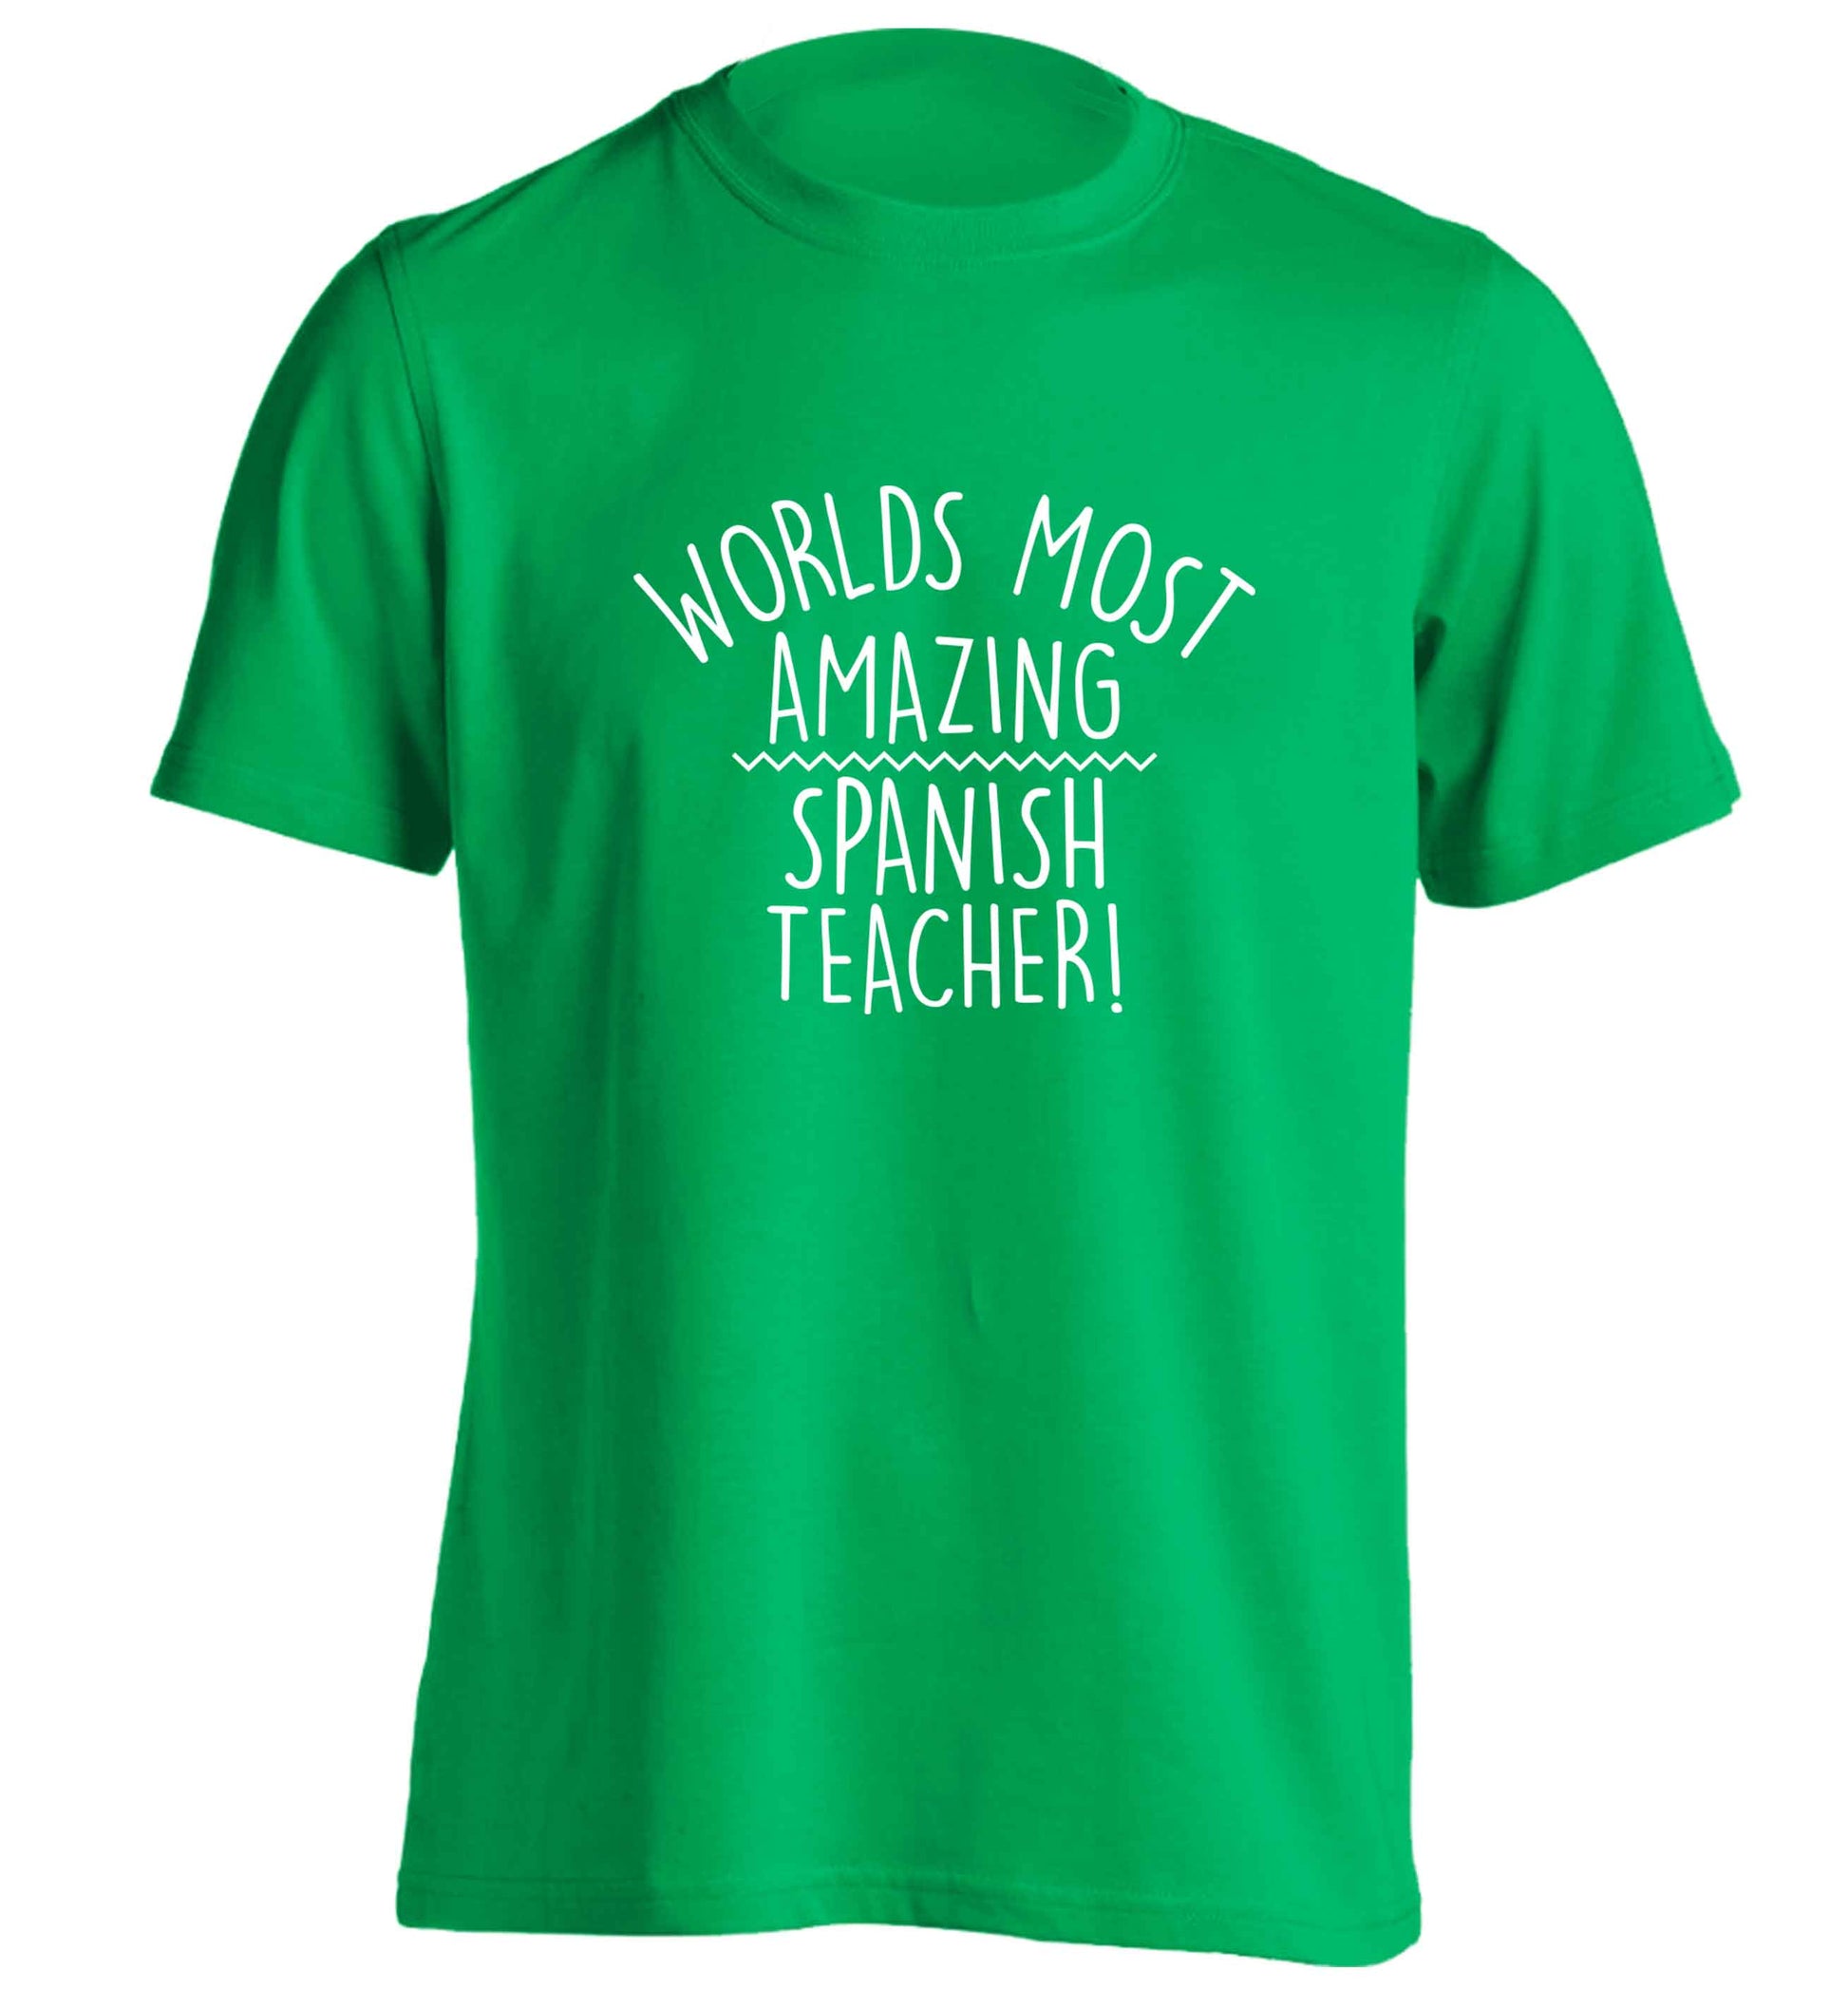 Worlds most amazing Spanish teacher adults unisex green Tshirt 2XL